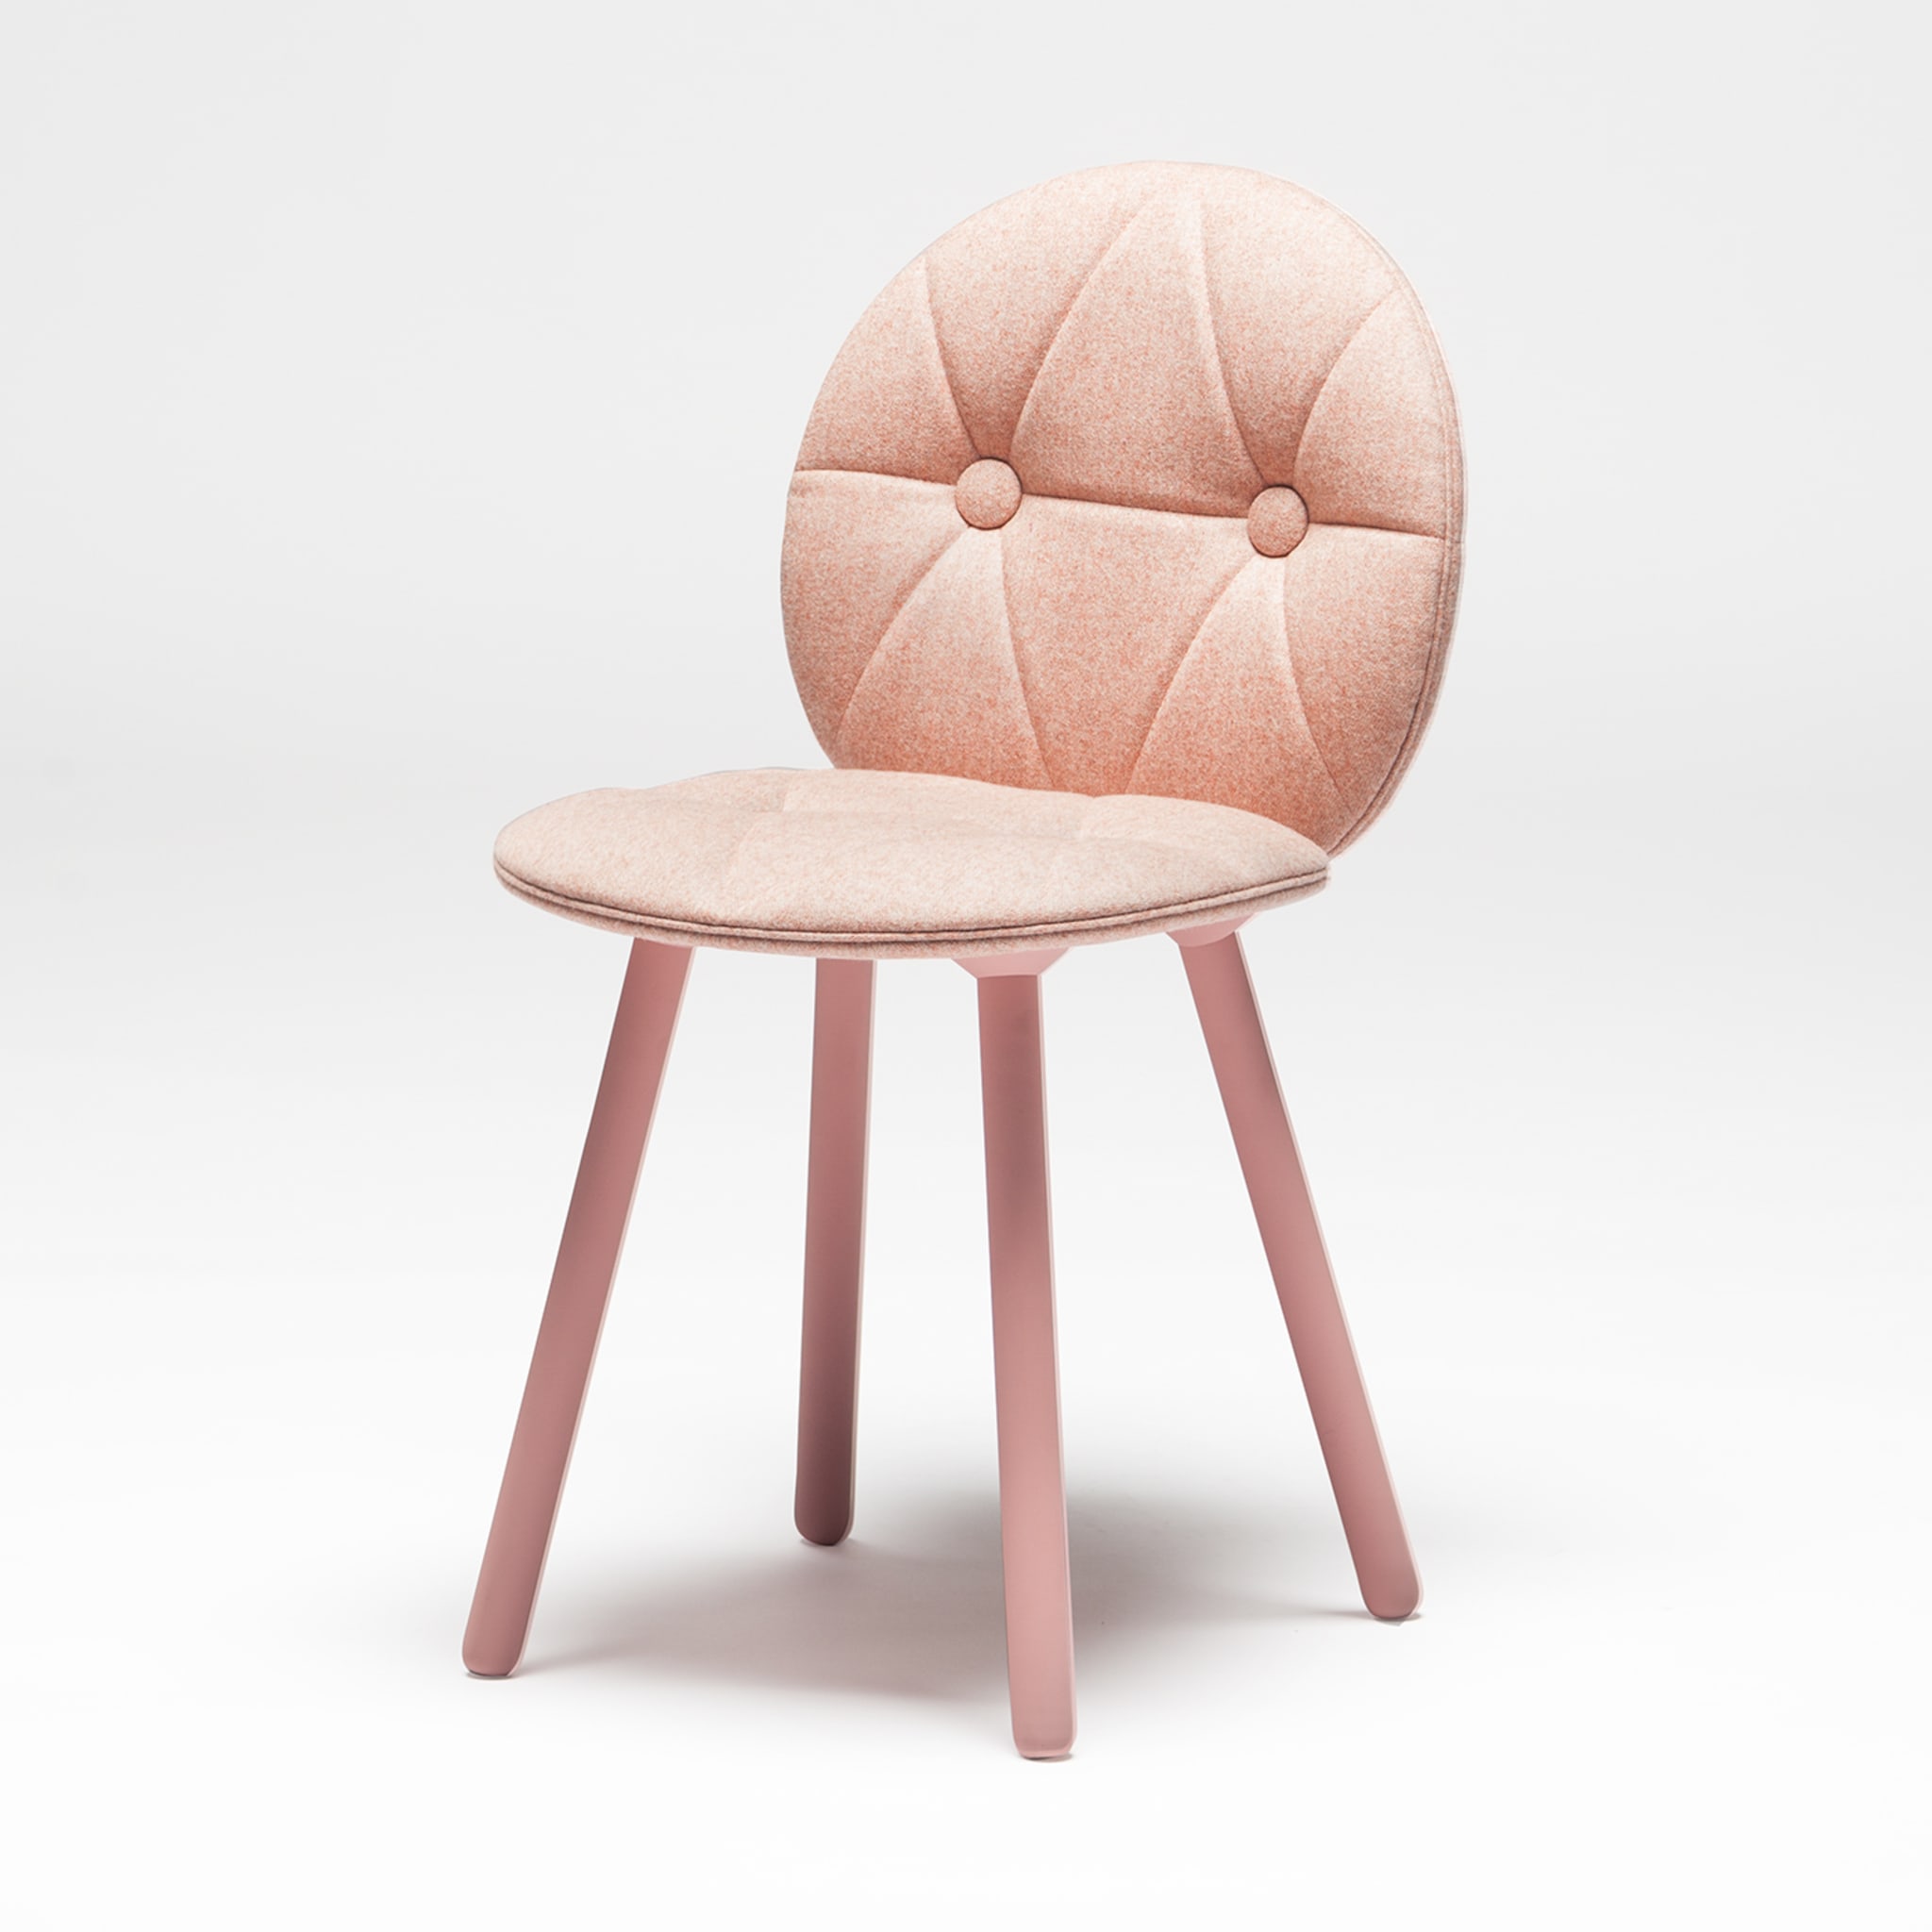 Harlequin 900 Pink Chair by Markus Johansson - Alternative view 3